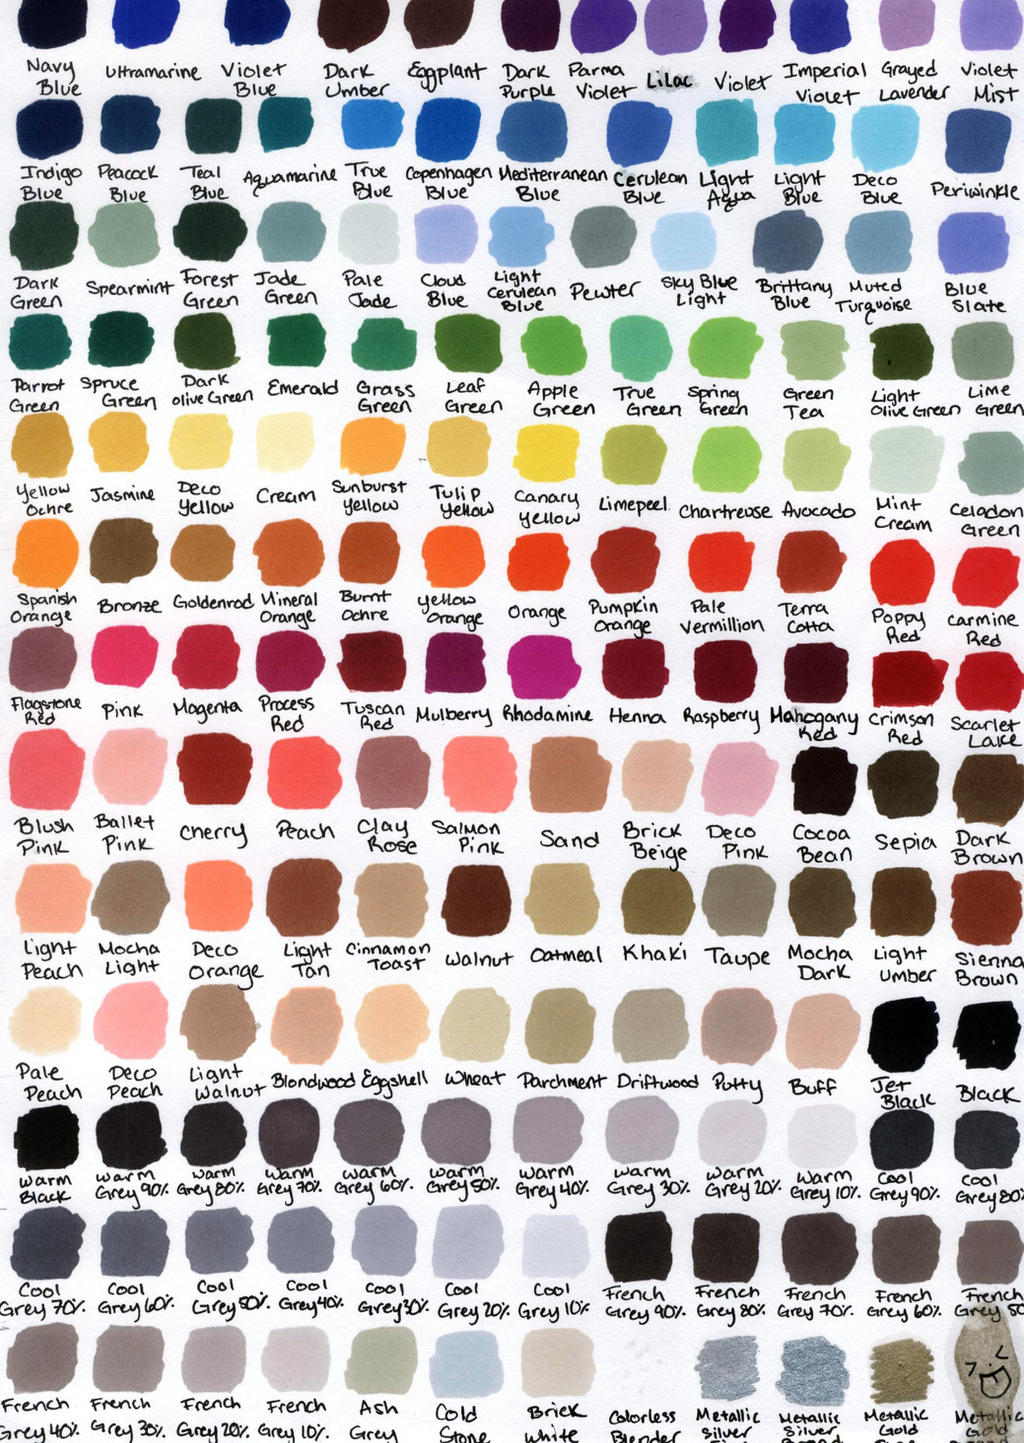 prismacolor-color-chart-by-katwynn-on-deviantart